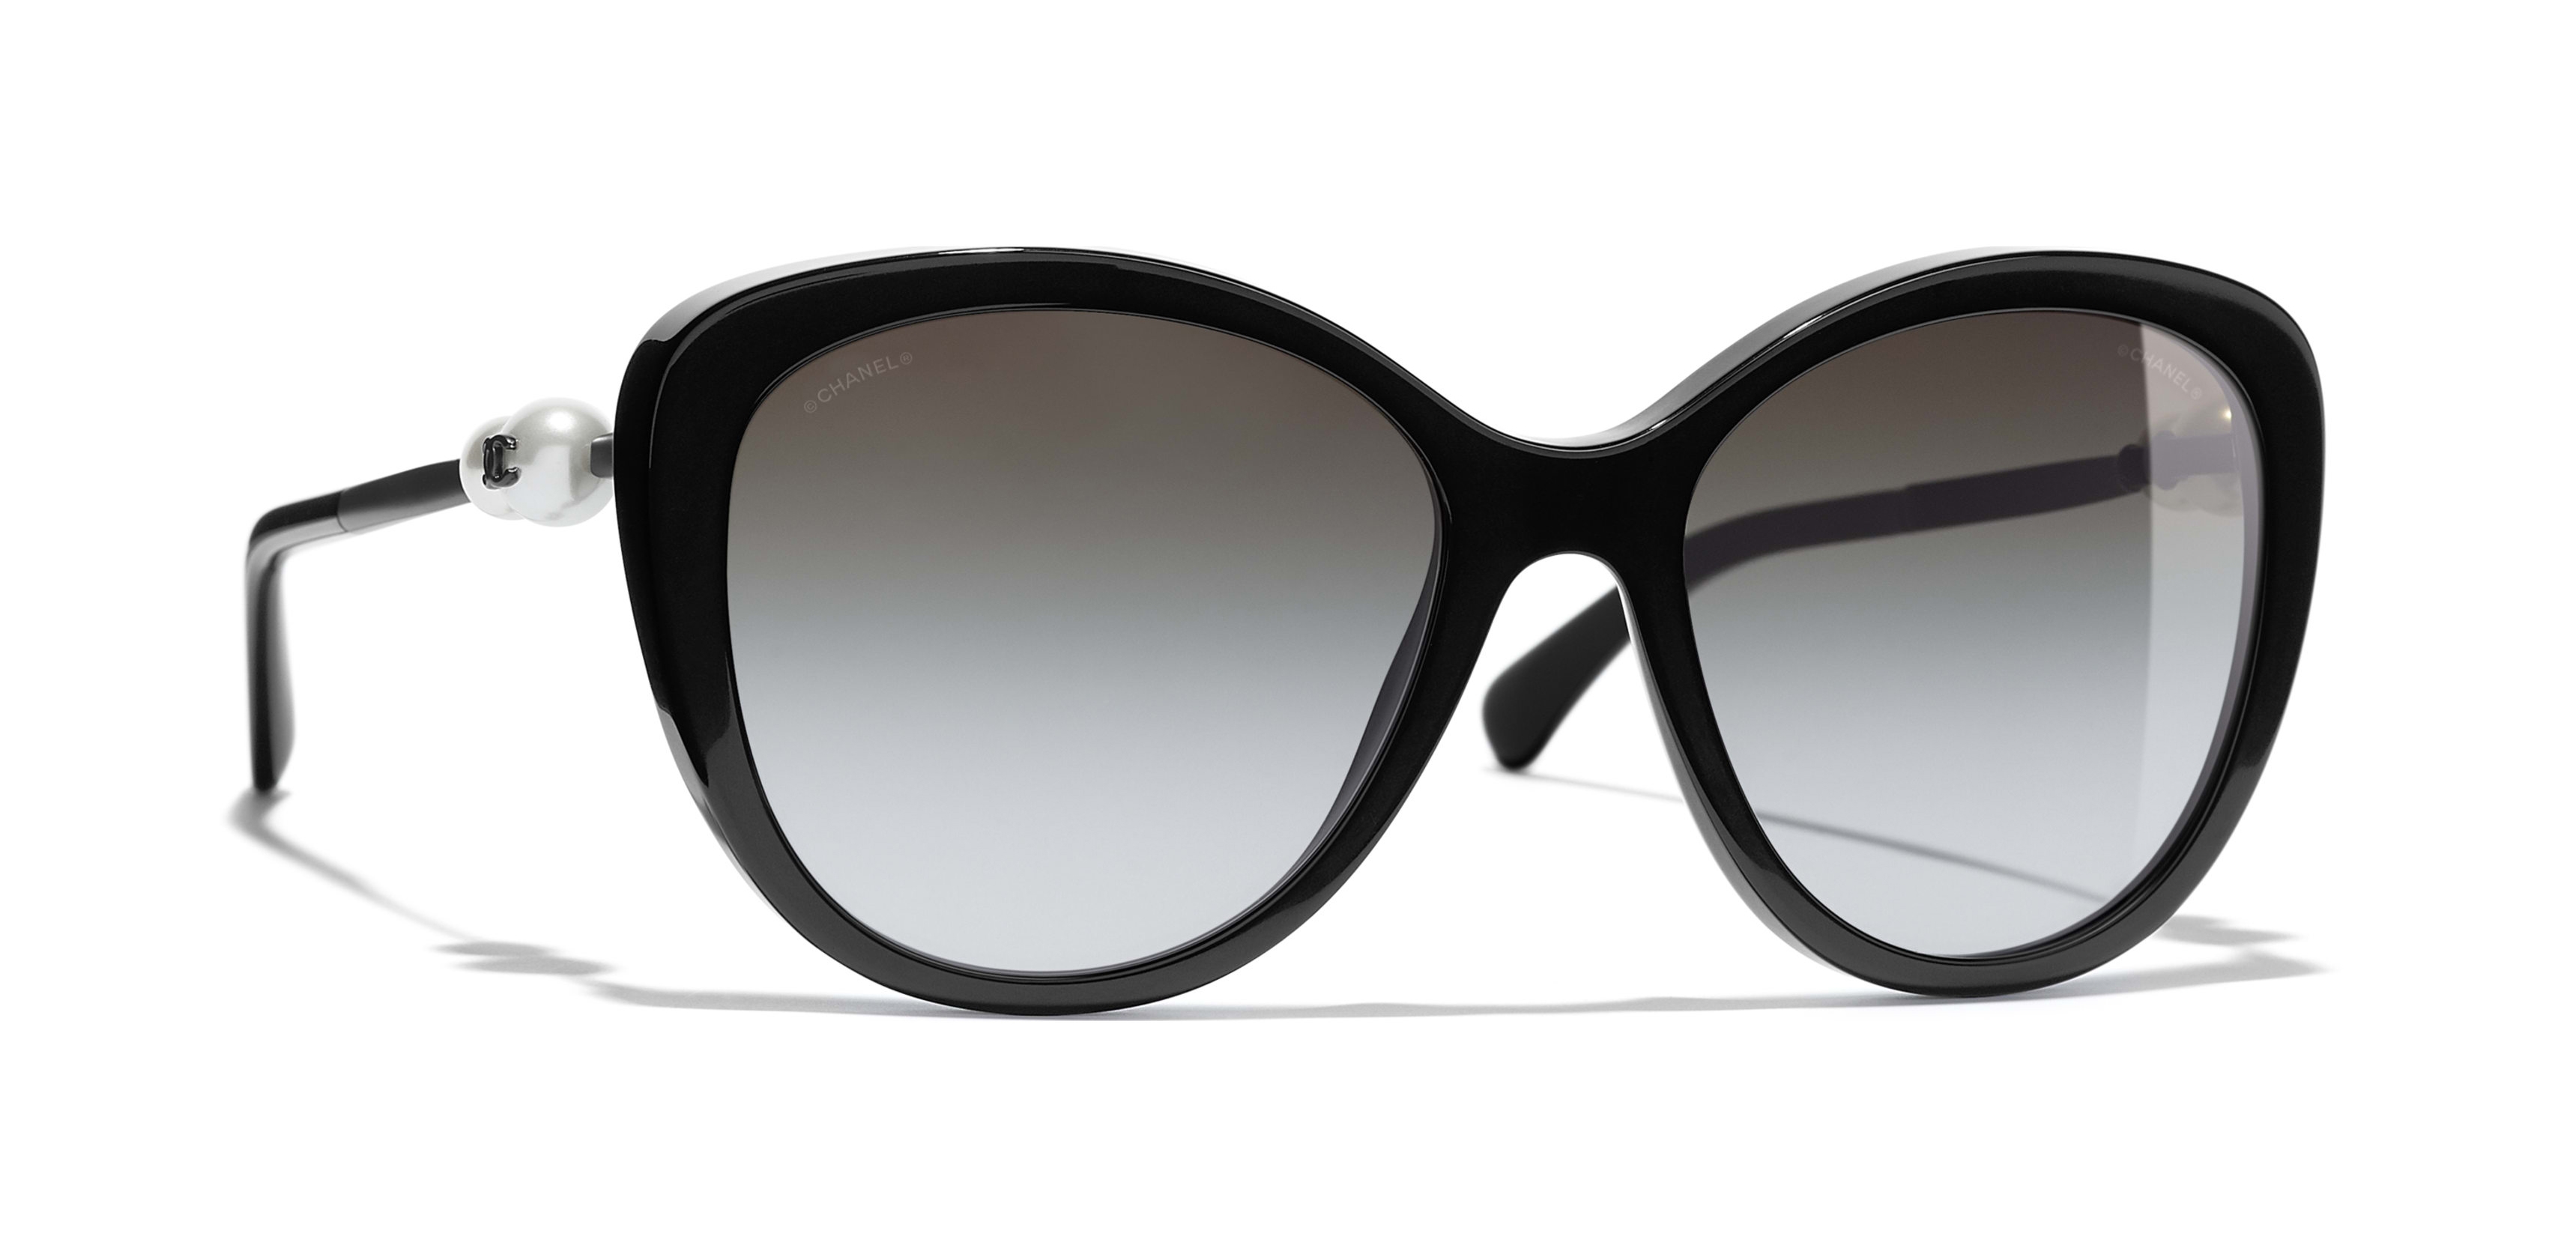 Chanel - Sunglasses - Black - Chanel Eyewear - Avvenice